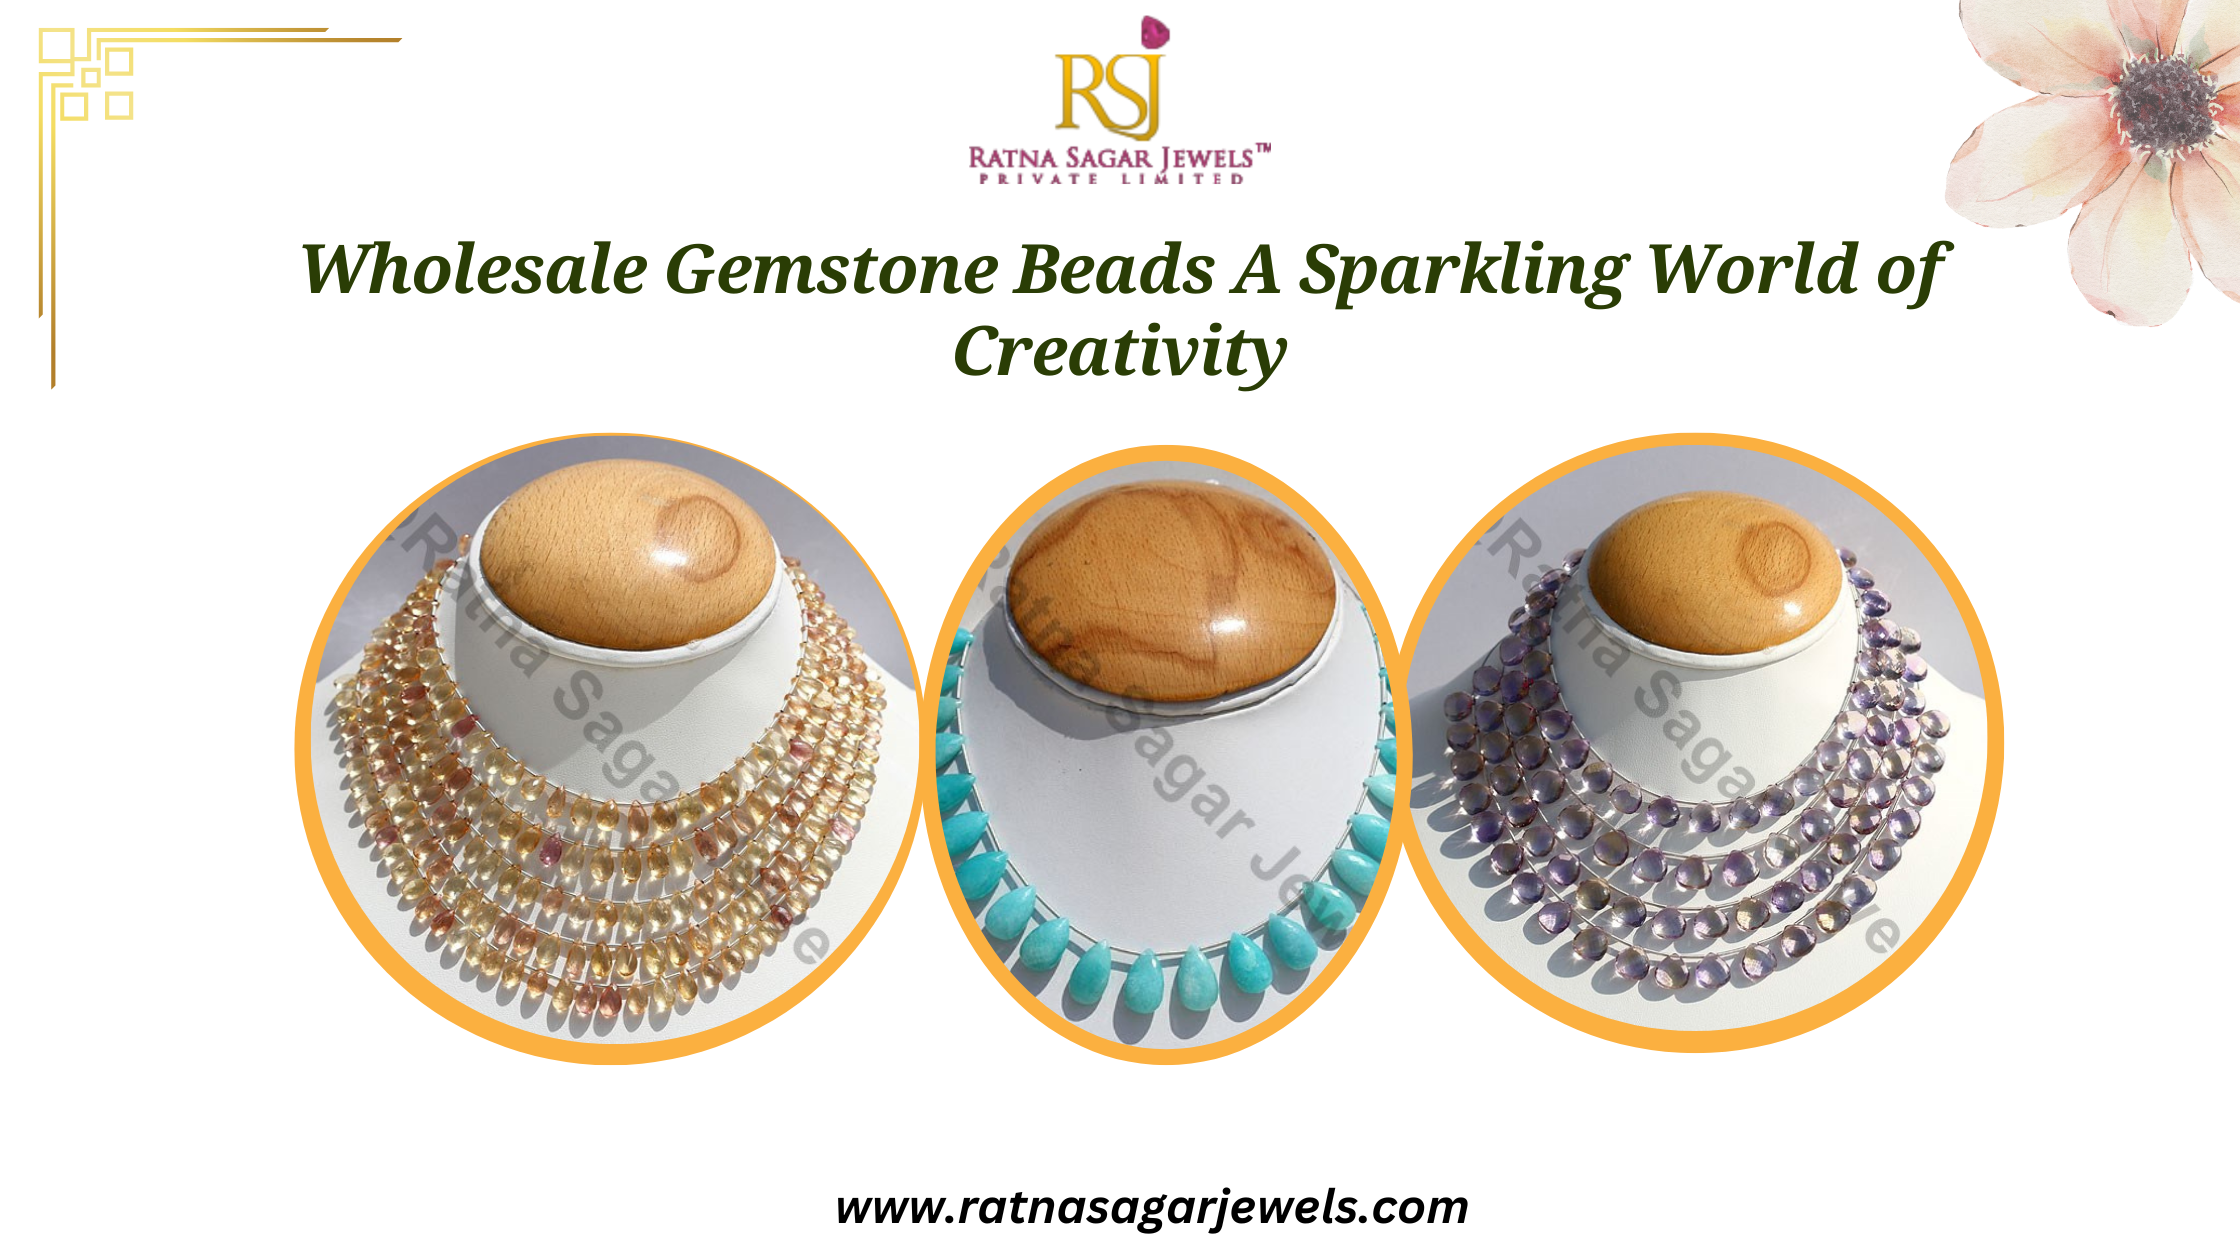 Wholesale Gemstone Beads: A Sparkling World of Creativity